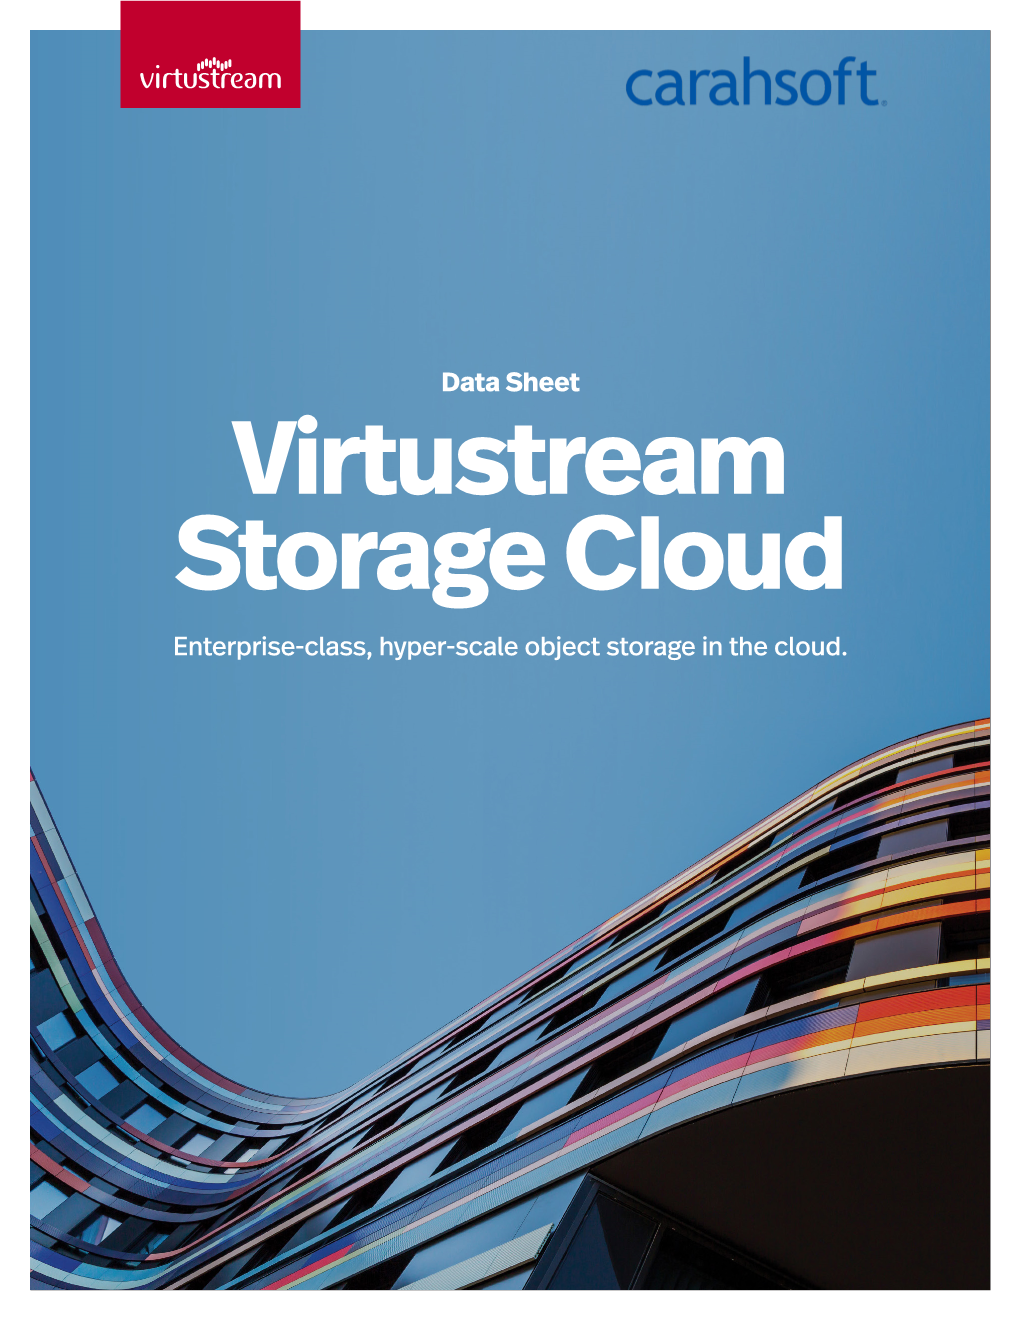 Virtustream Storage Cloud Enterprise-Class, Hyper-Scale Object Storage in the Cloud